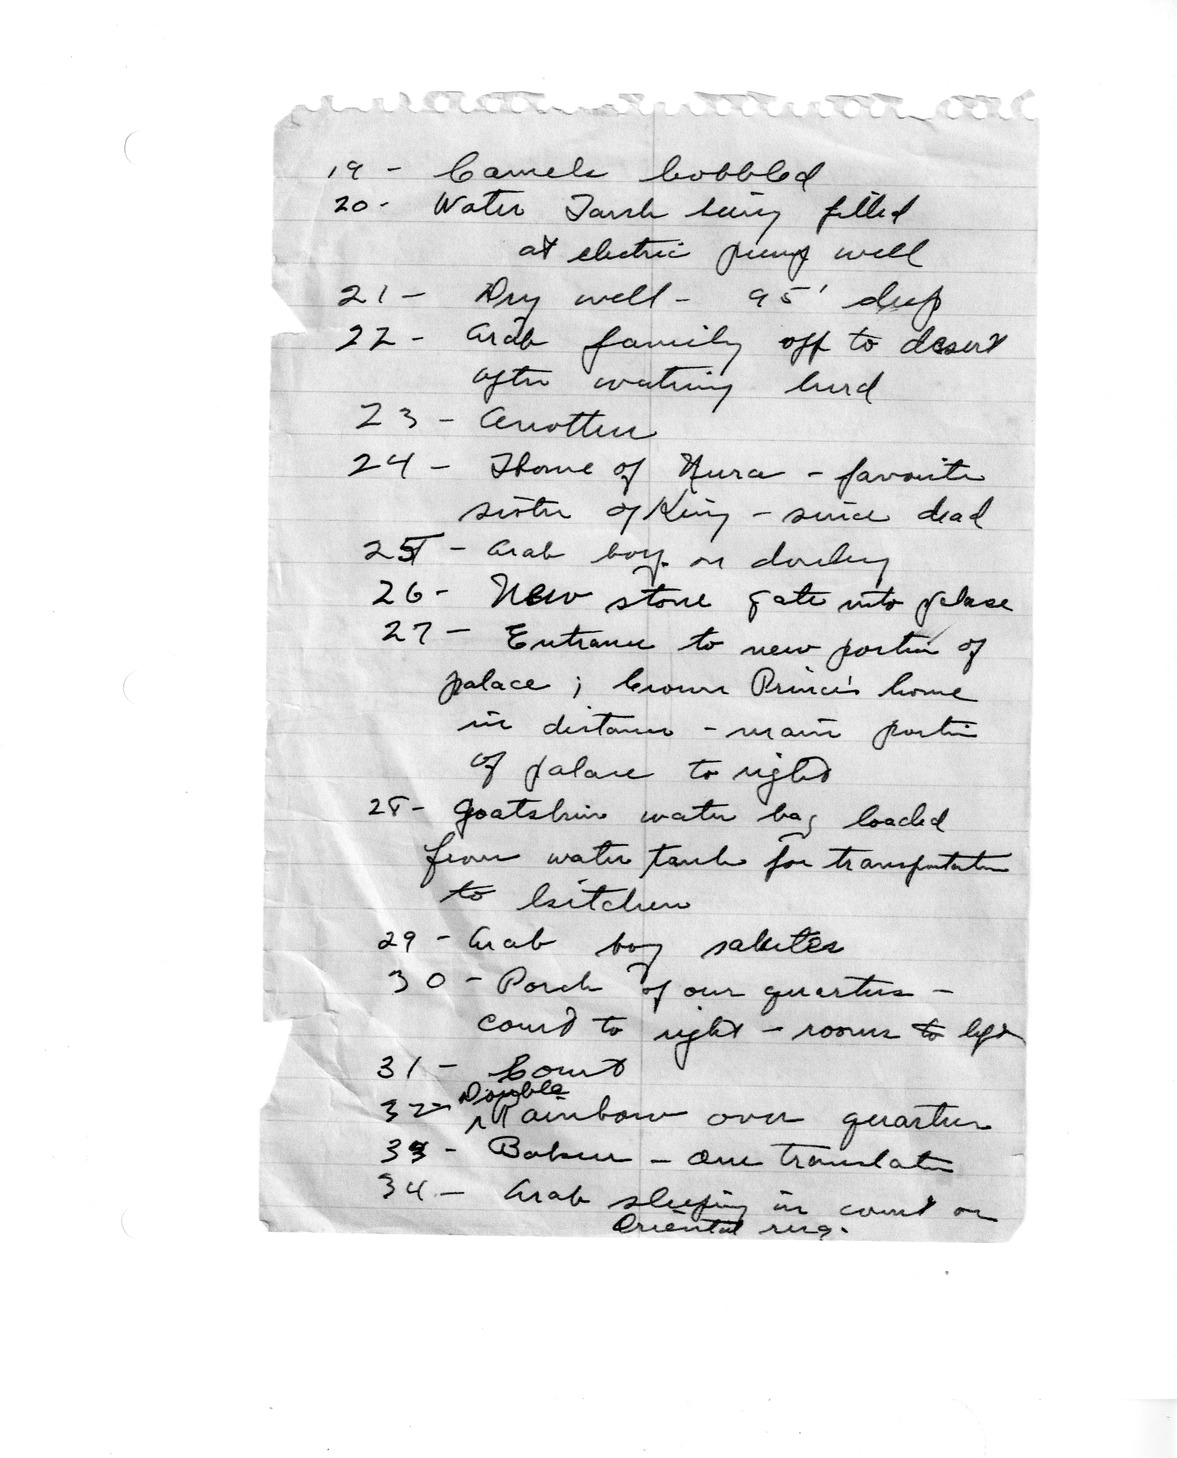 Handwritten Notes by Dr. Darrell Crain Describing Slides